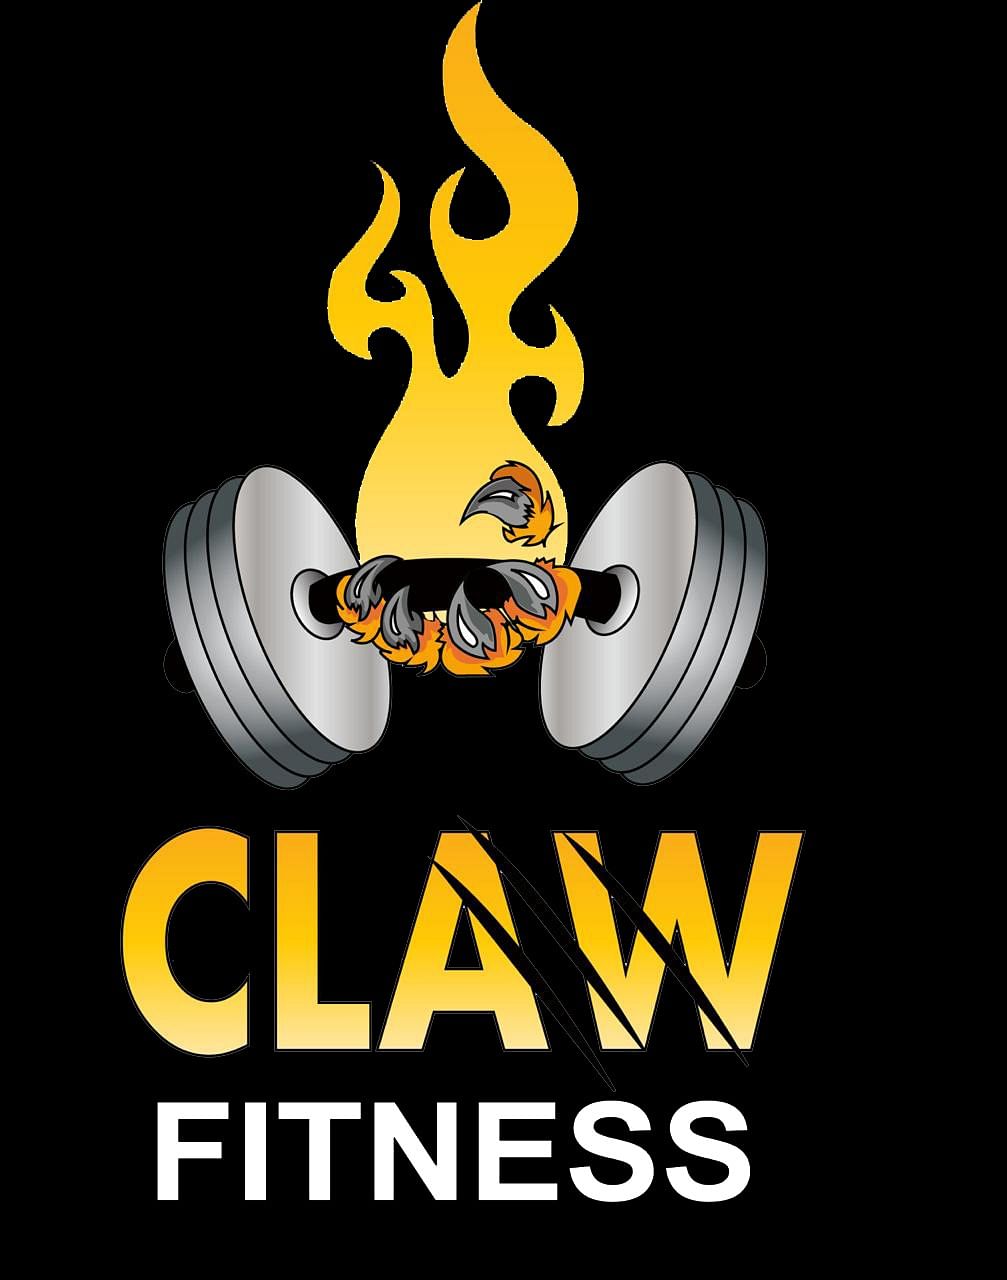 Claw Fitness Surapet